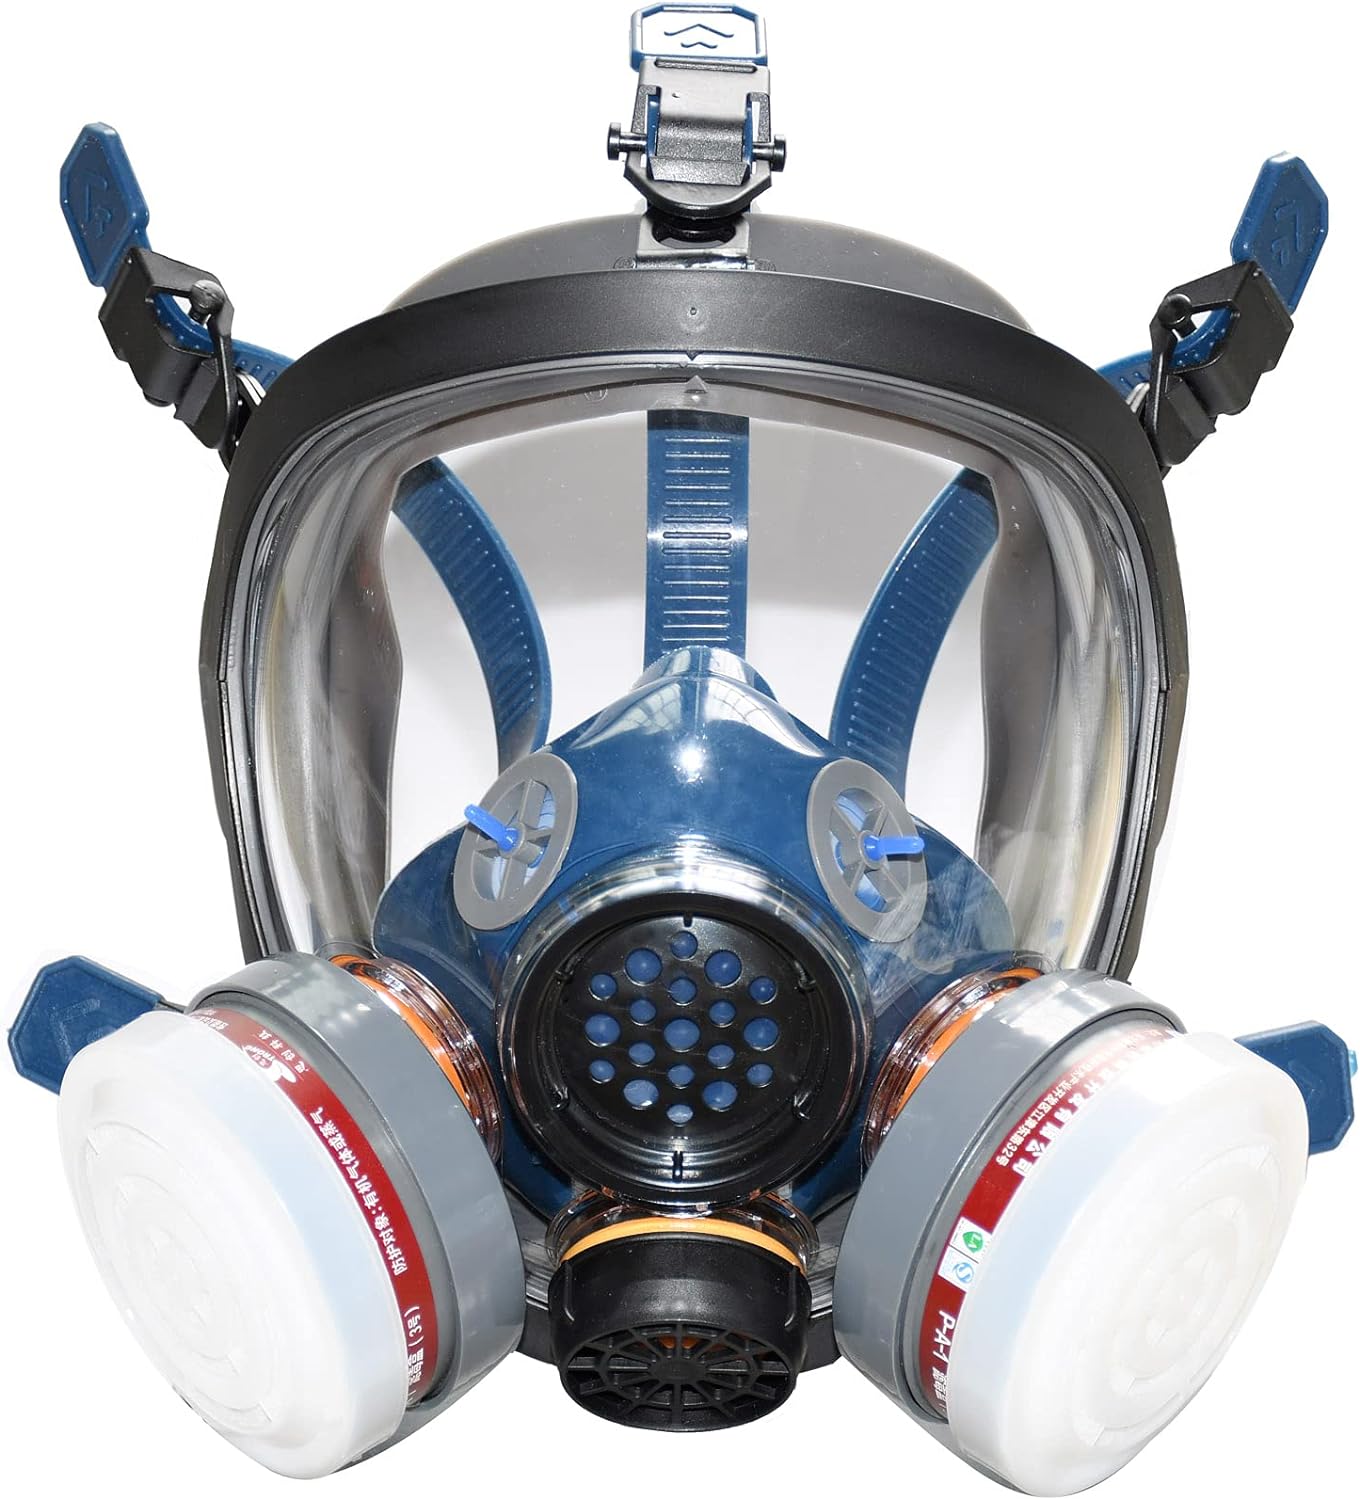 UOPASD Organic Vapor Respirator full face gas mask with Activated Carbon Air Filter